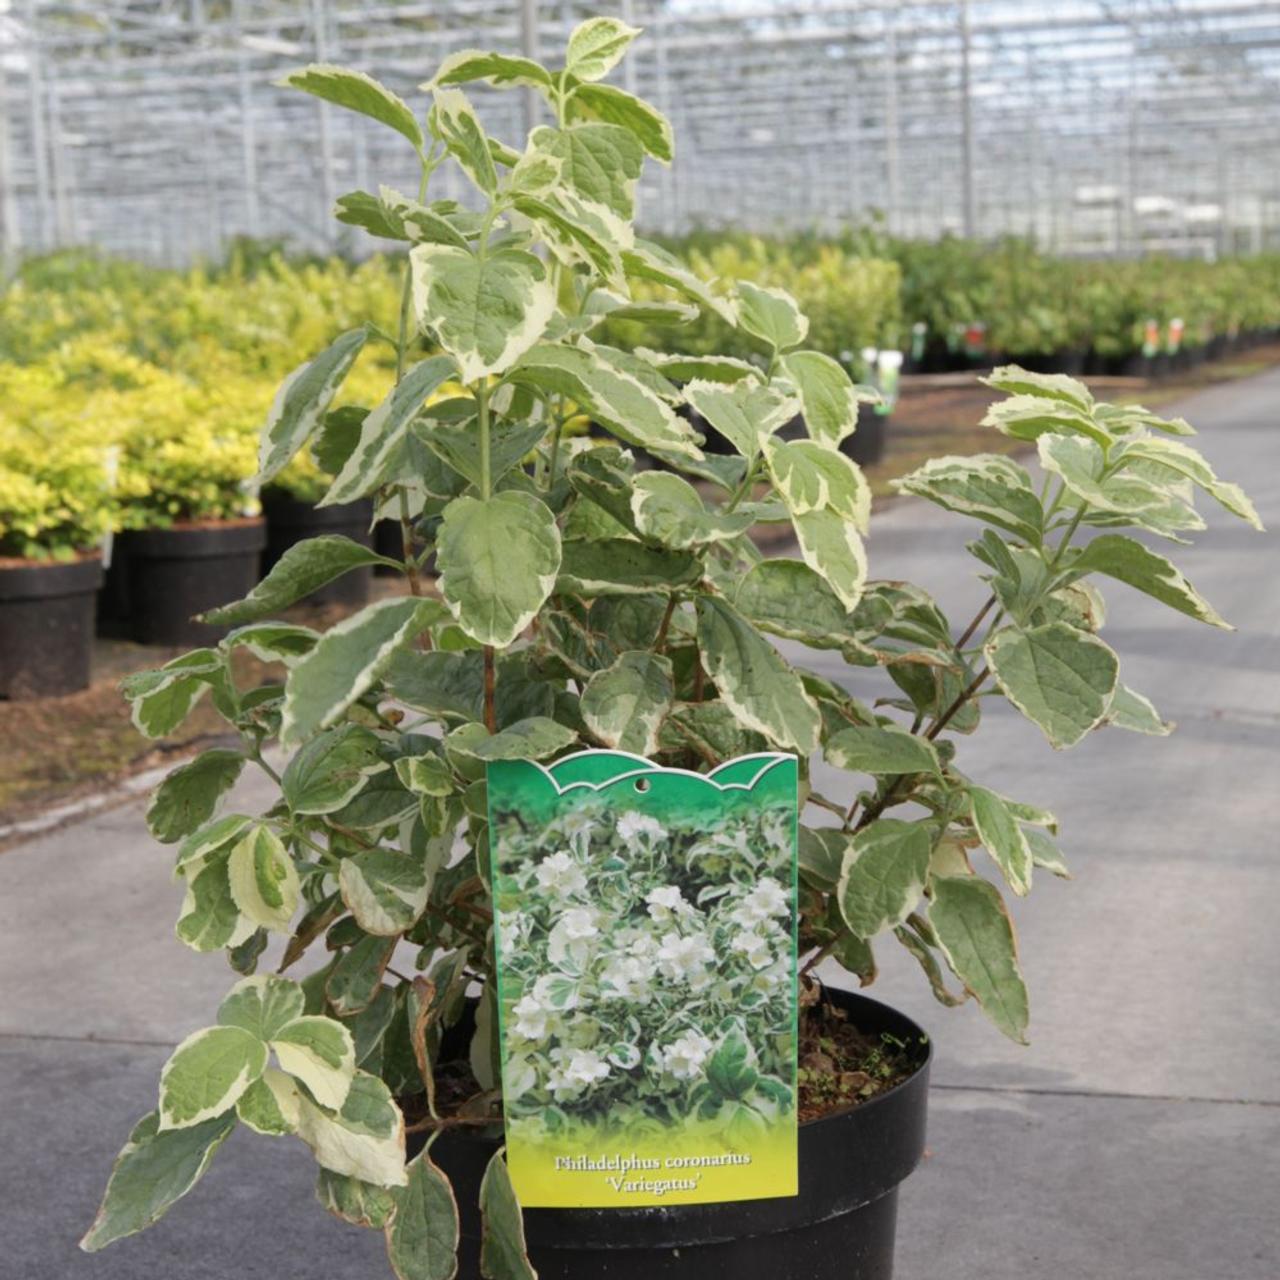 Philadelphus coron. 'Variegatus' plant